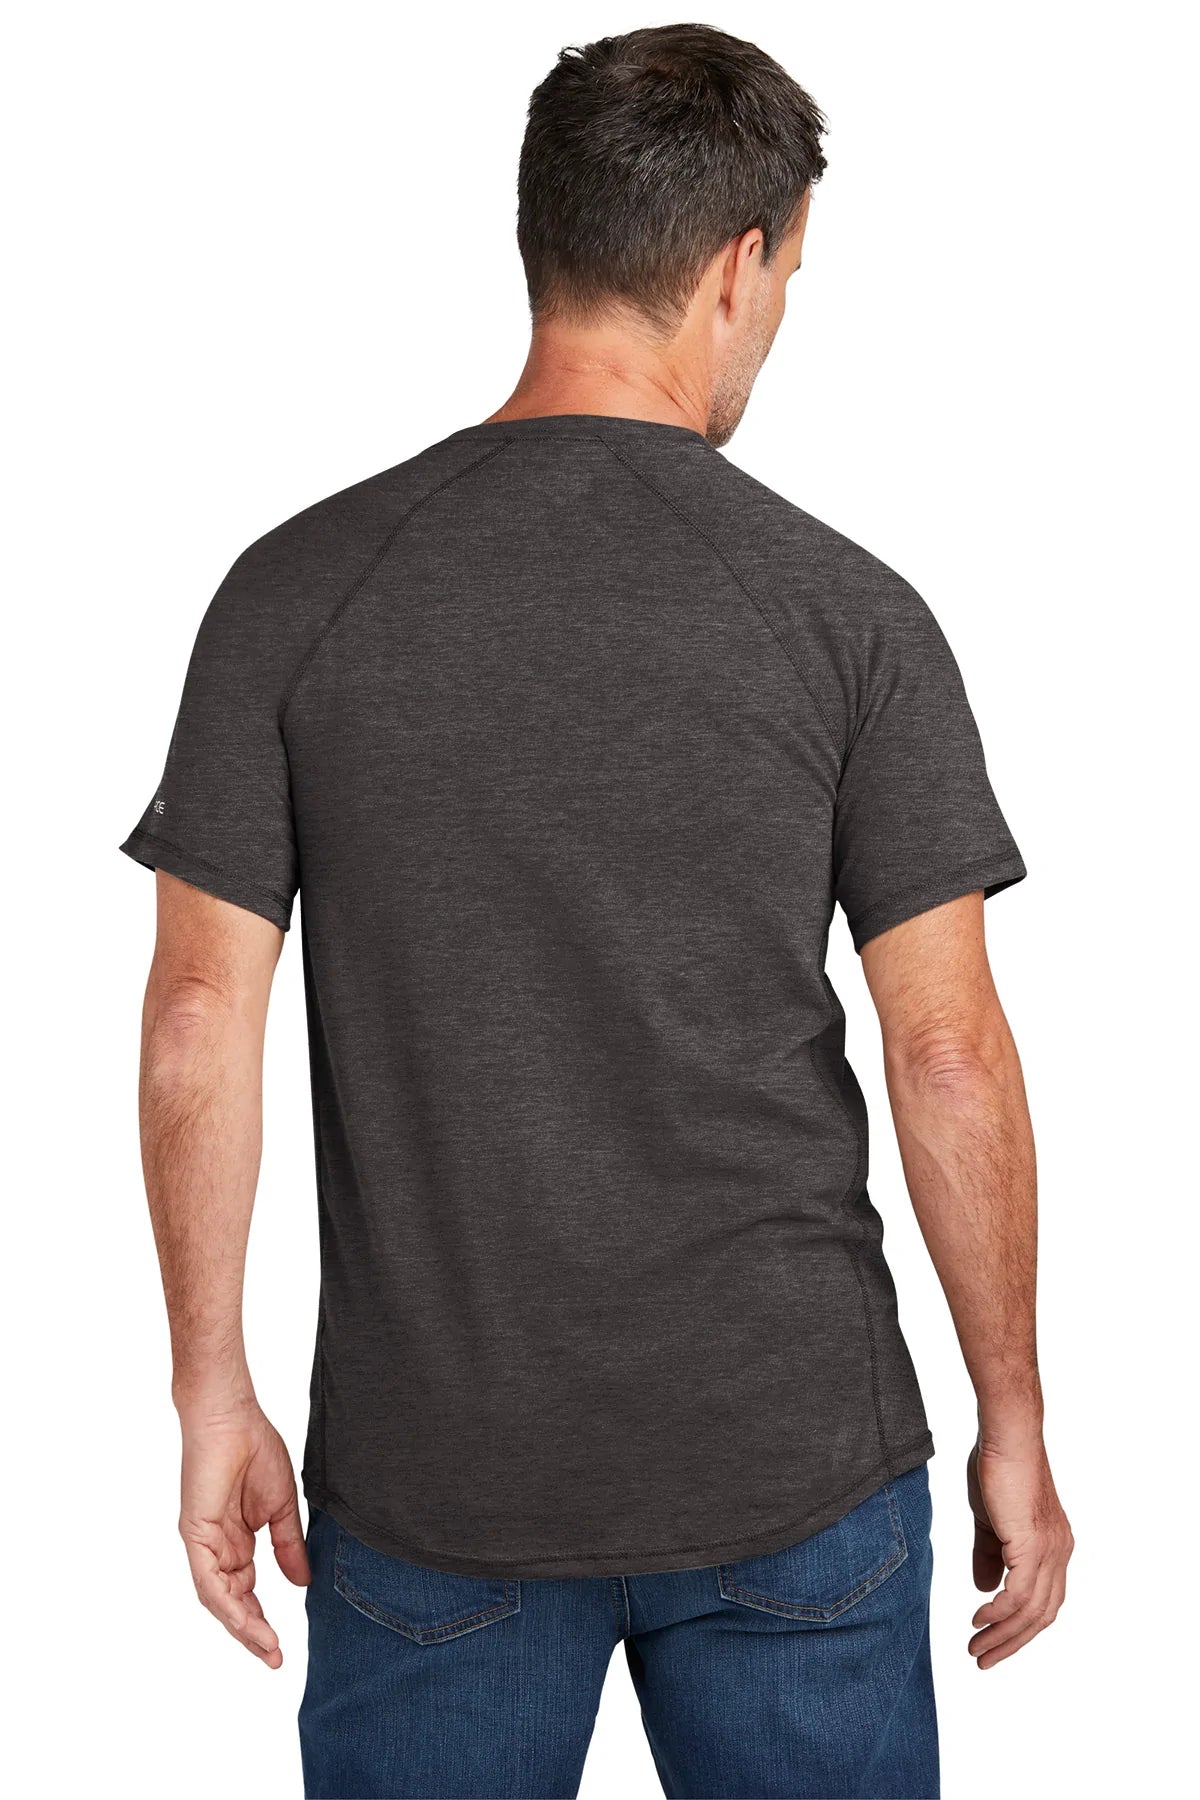 Carhartt Force Custom Pockets T-Shirts, Carbon Heather